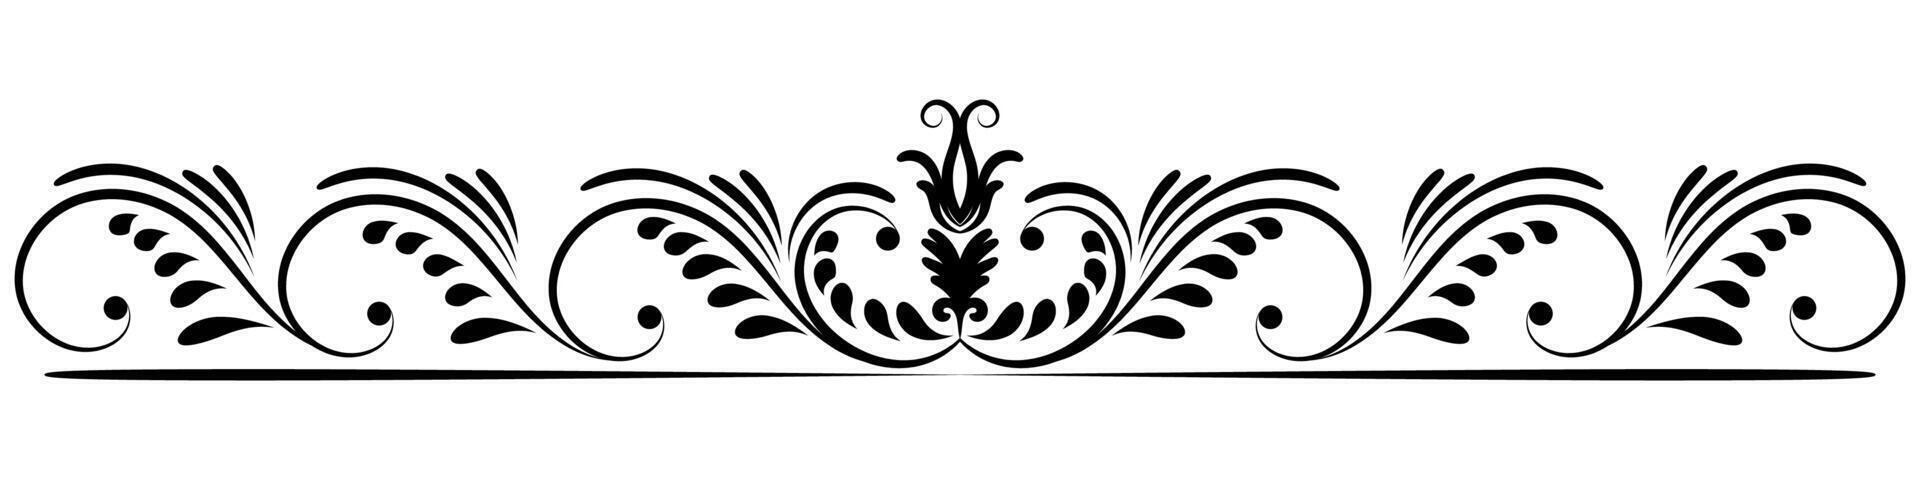 flor frontera decorativo diseño elemento Boda pancartas, marcos, etiquetas, negro líneas en blanco. vector